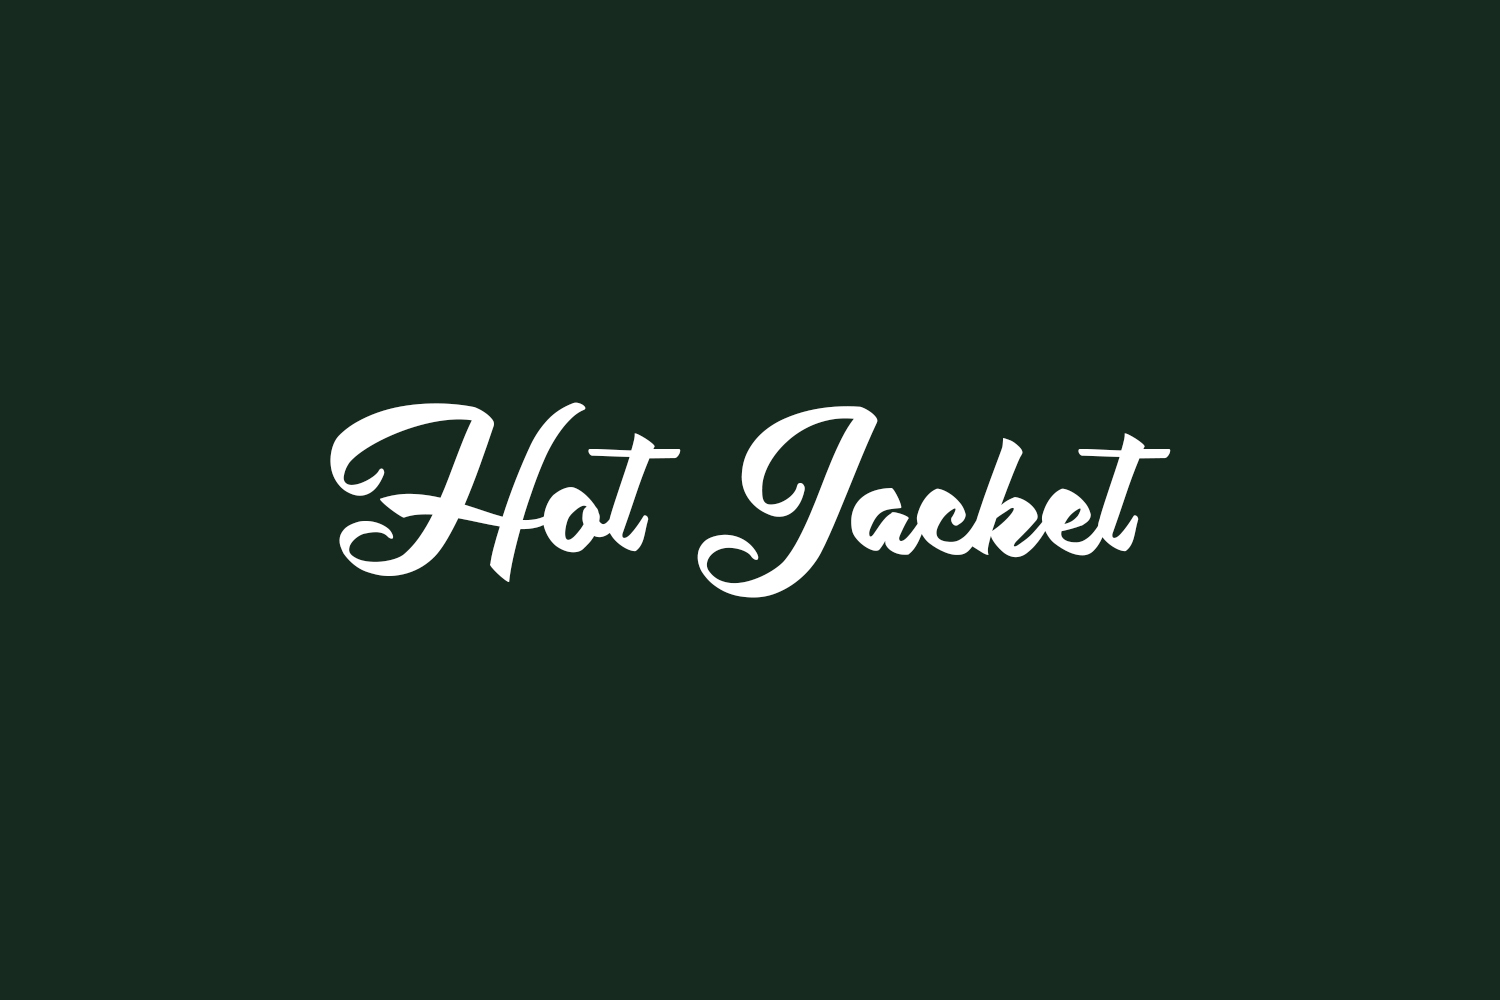 Hot Jacket Free Font